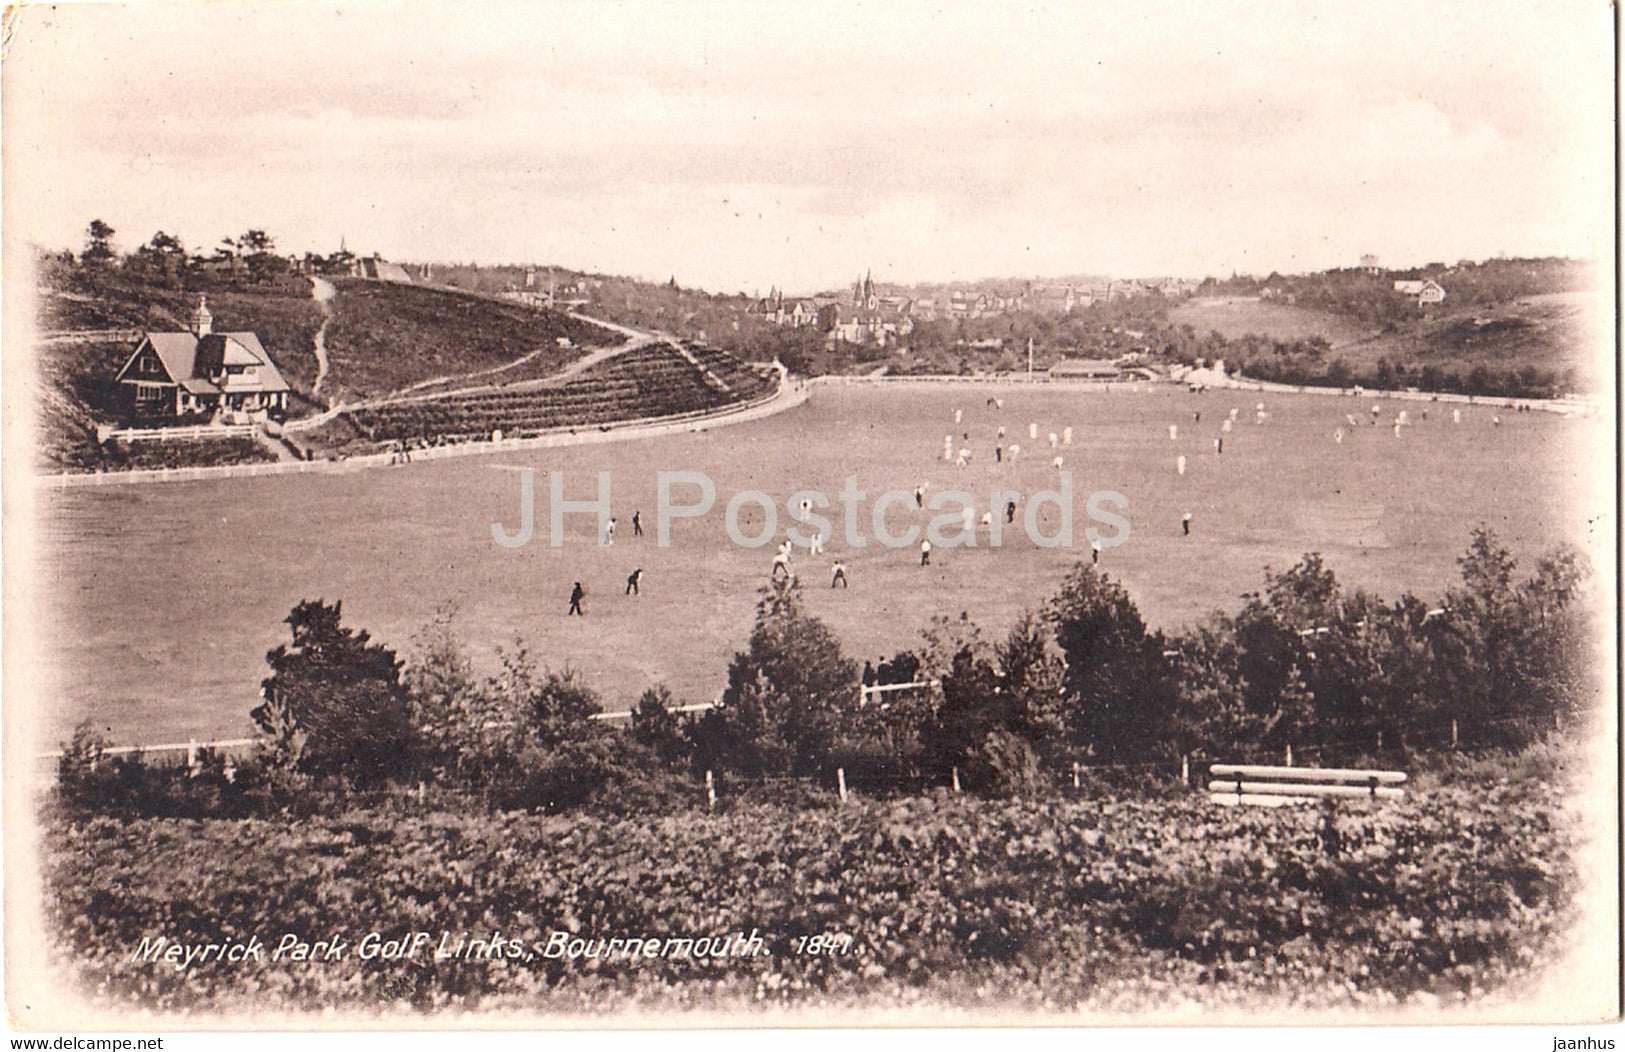 Bournemouth - Meyrick Park Golf Links - 1841 - old postcard - England - United Kingdom - unused - JH Postcards